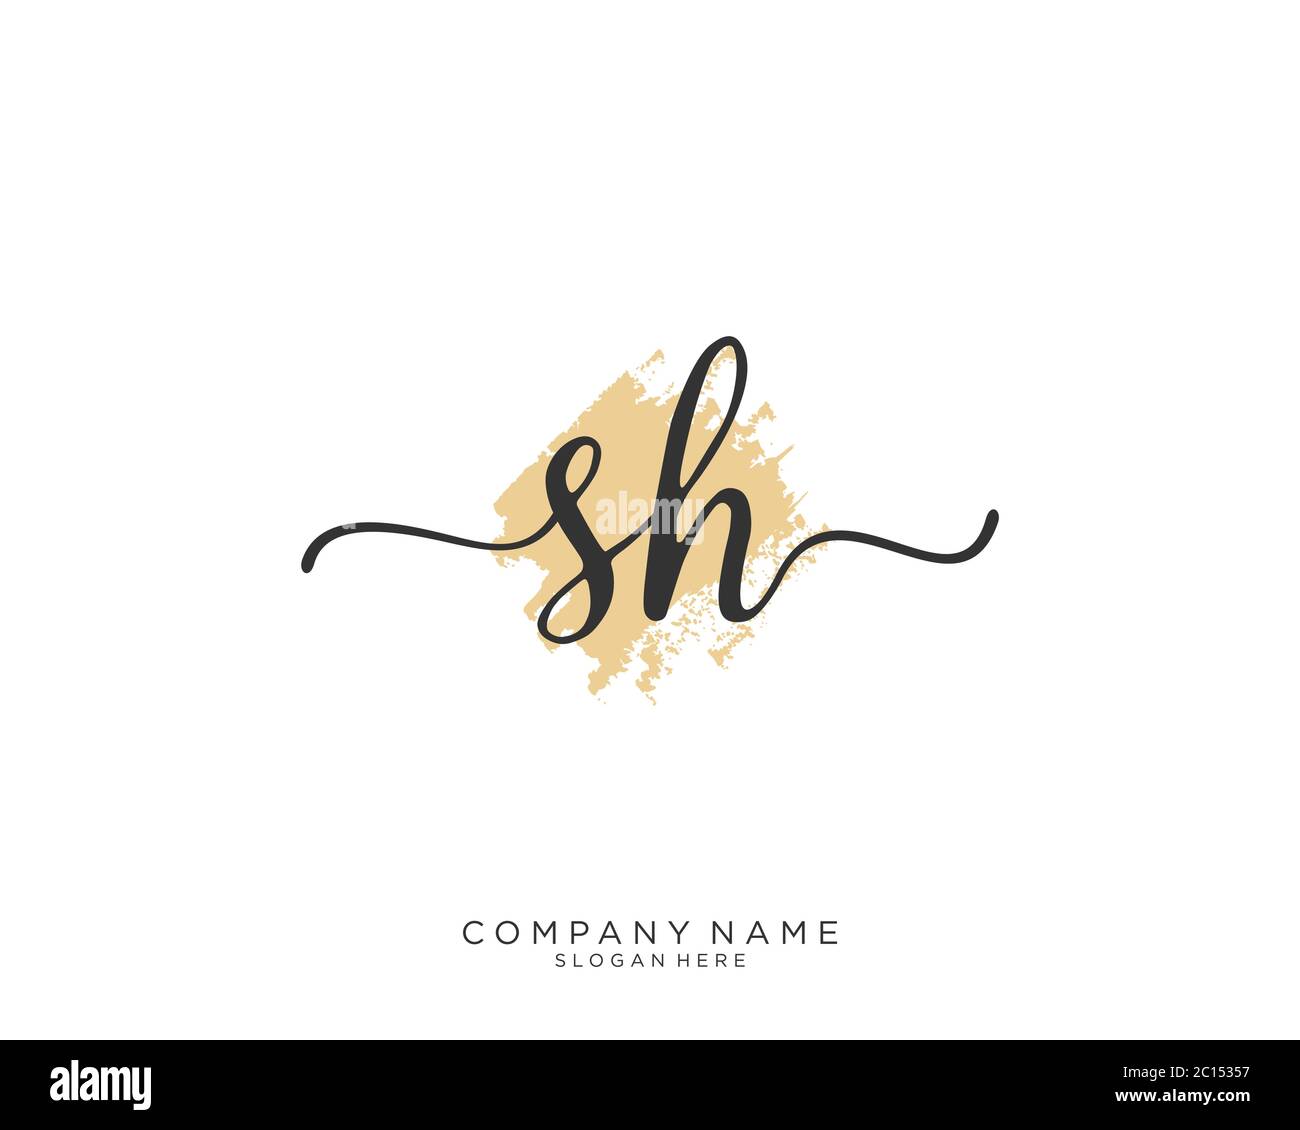 SH Initial handwriting logo vector Stock Vector